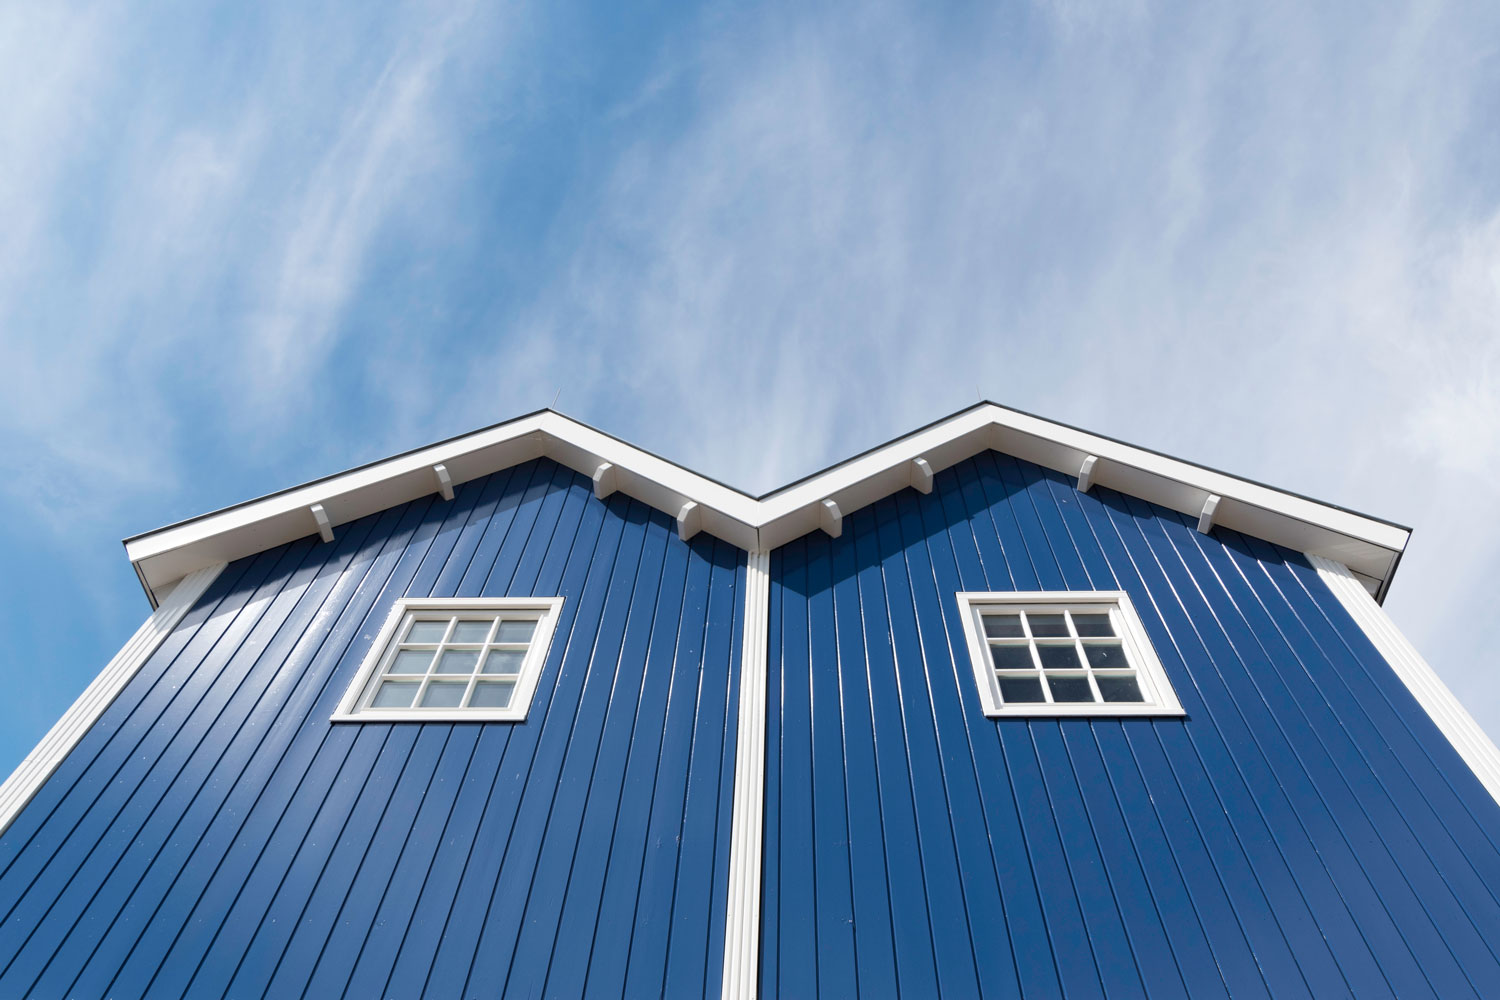 A tall blue walled farmhouse with white trims